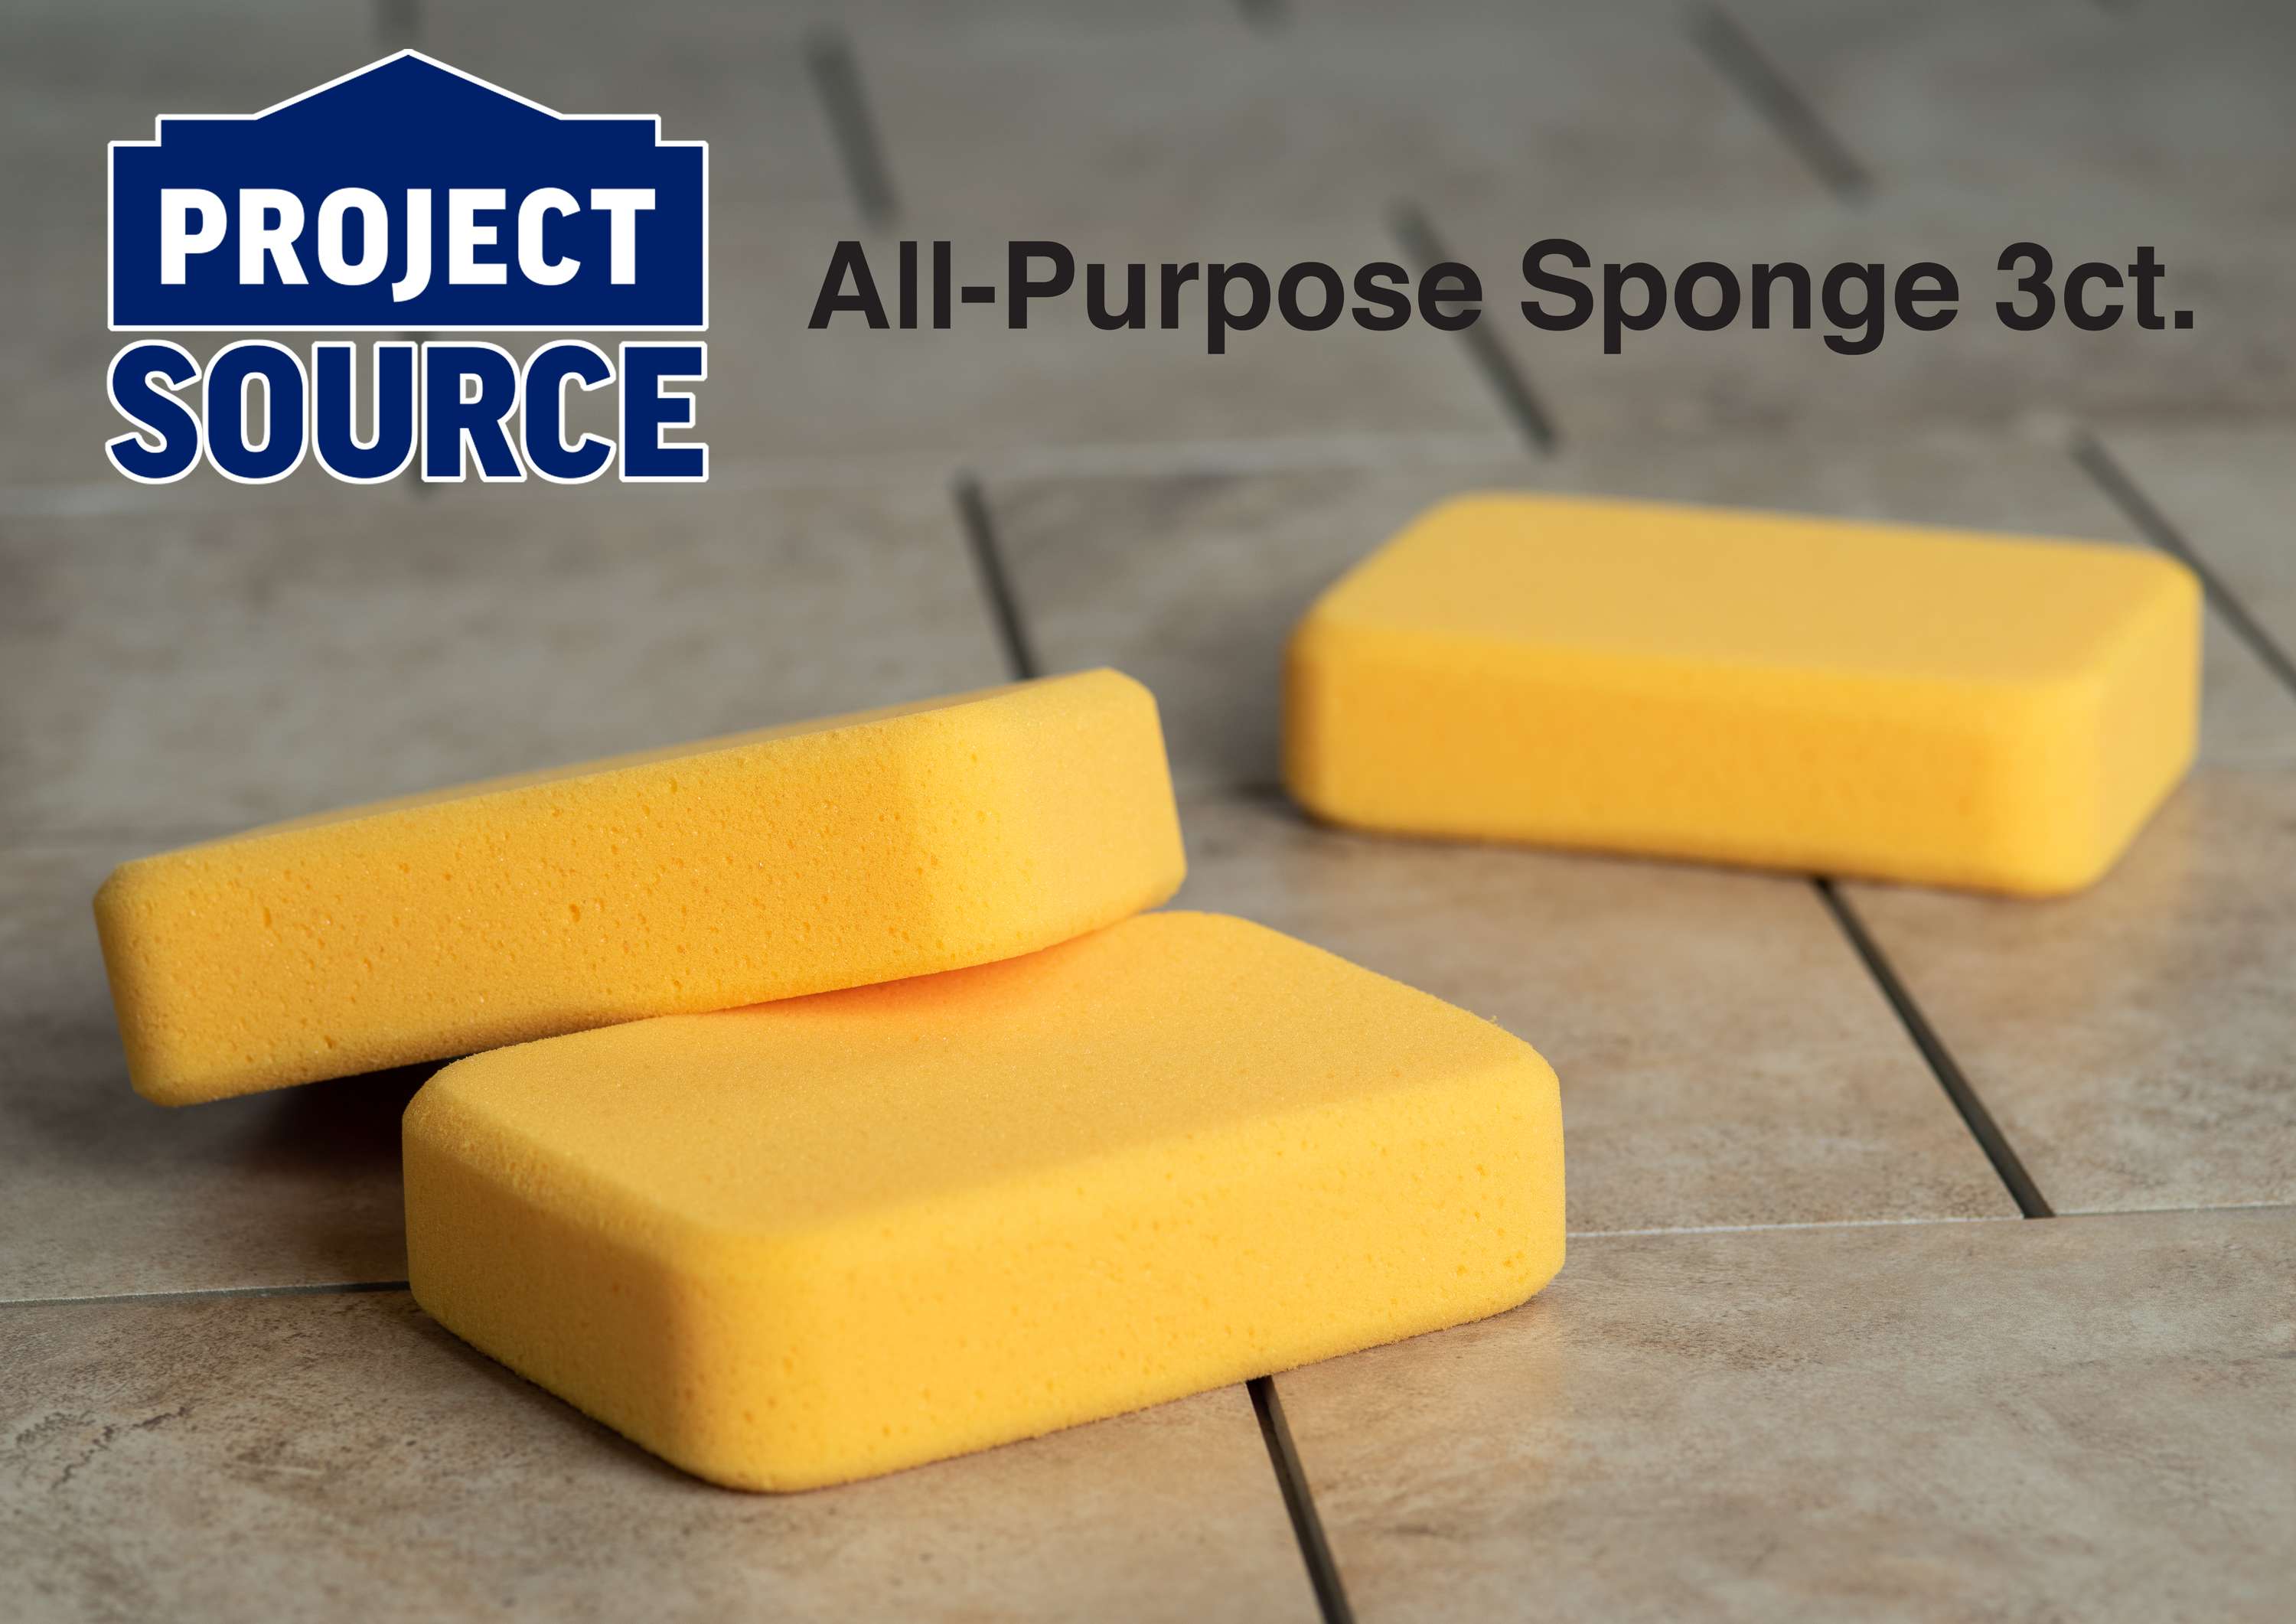 Multi-Purpose Sponge (12-Pack)